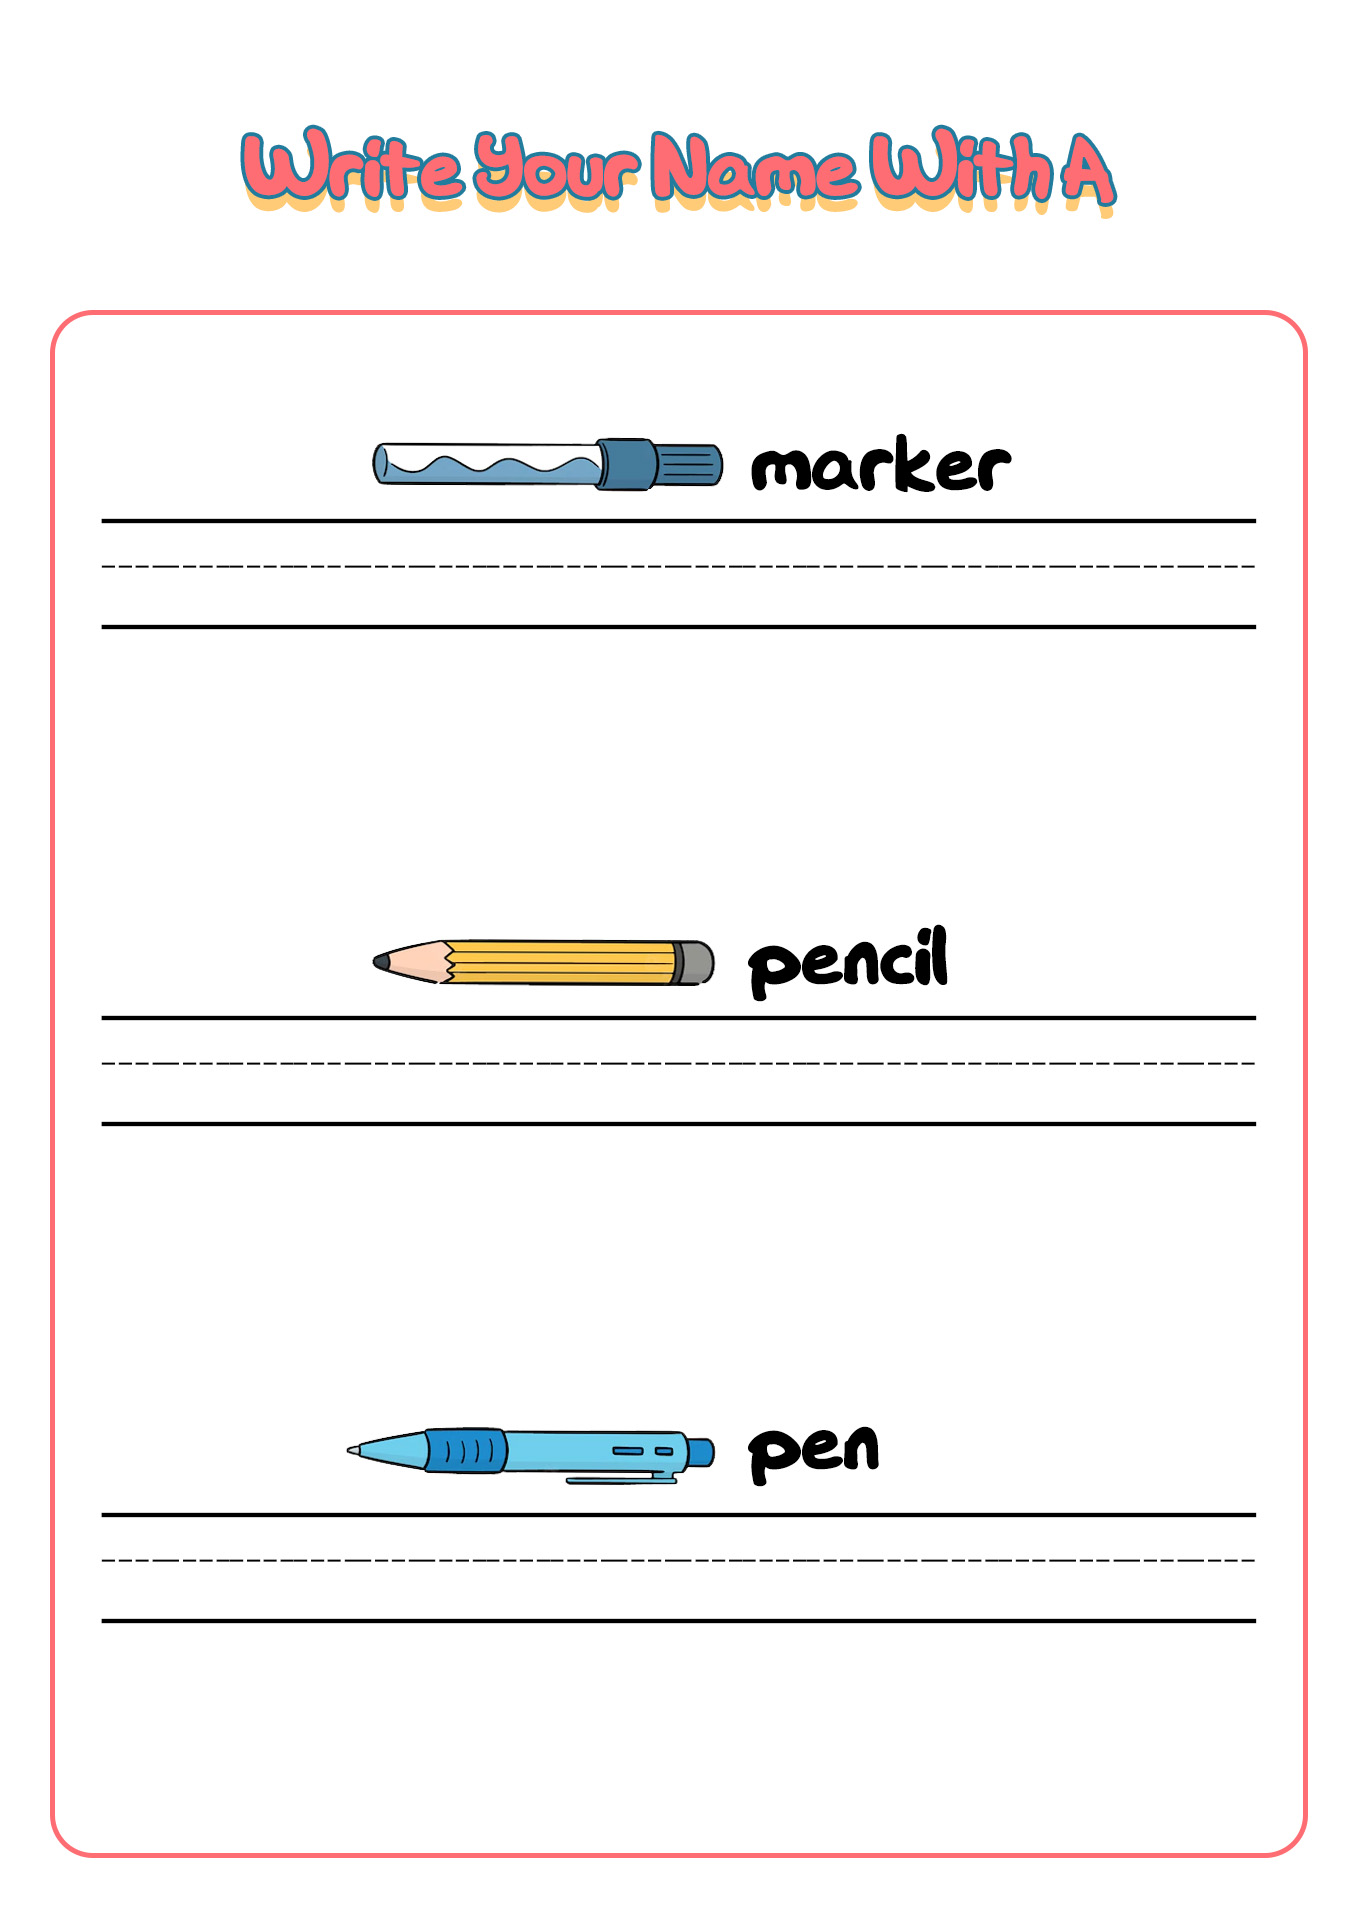 Marker Pen Pencil Writing Name Worksheet Image